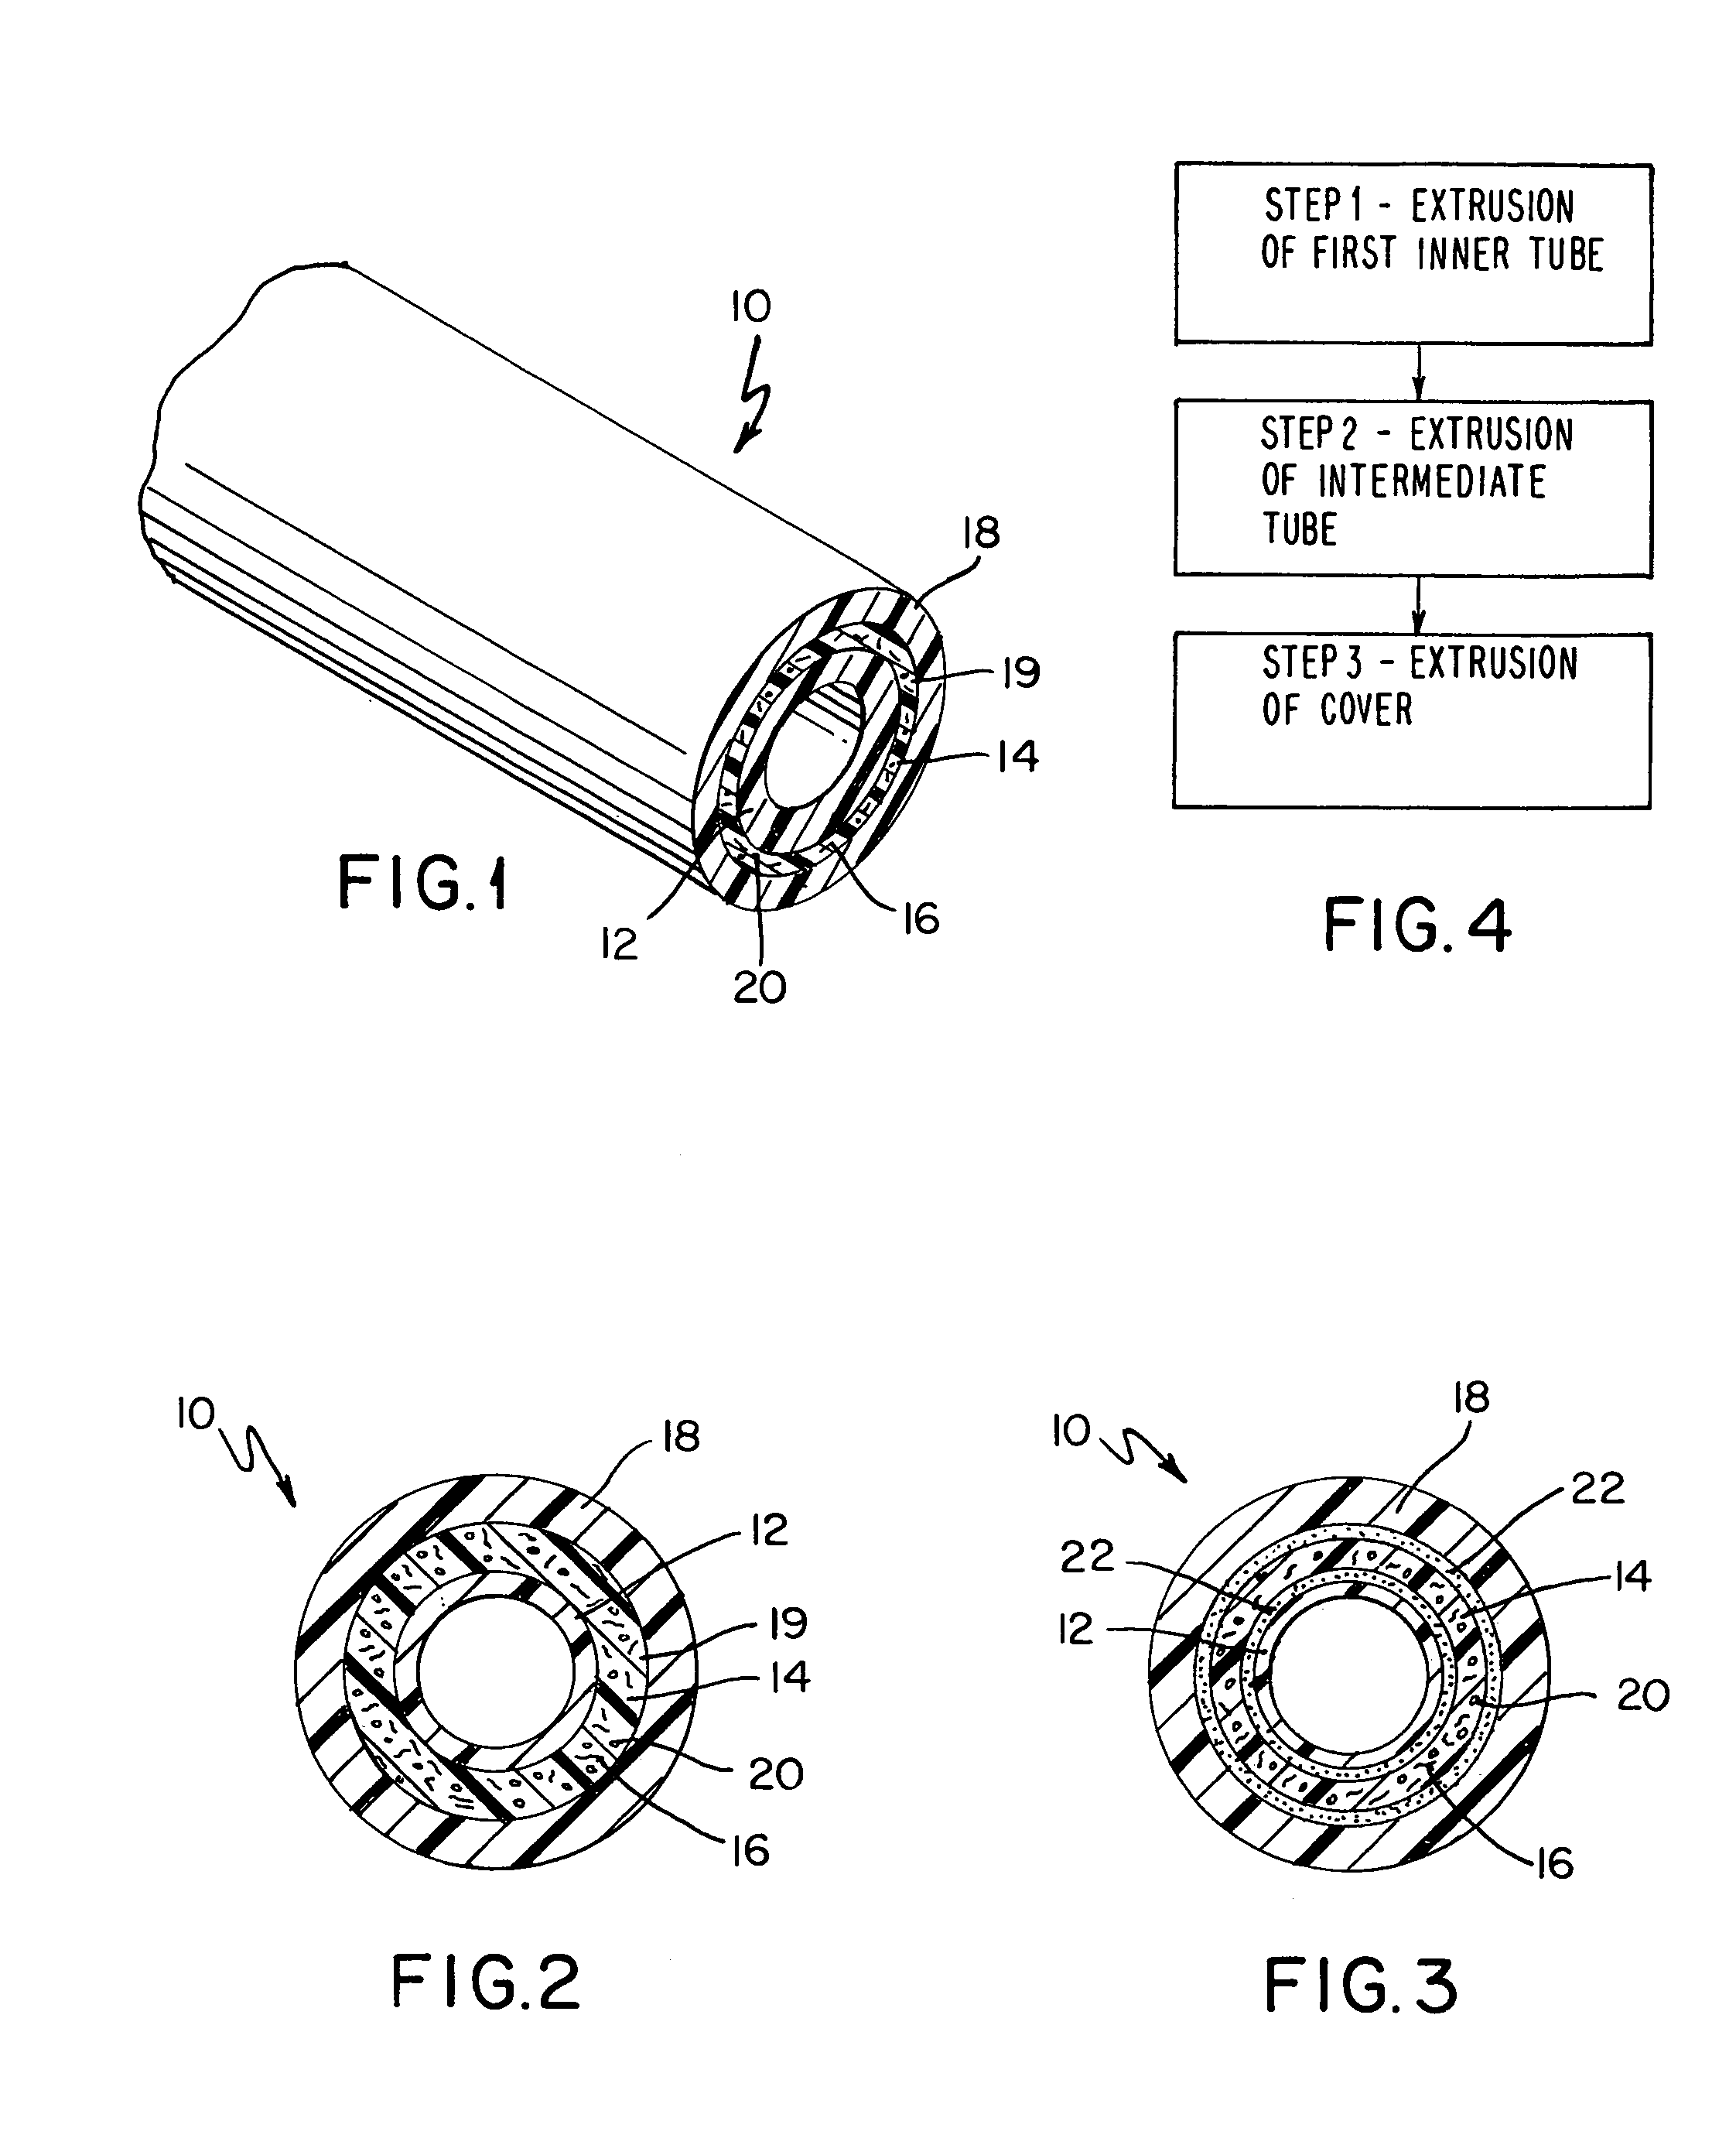 Multi-layered flexible tube